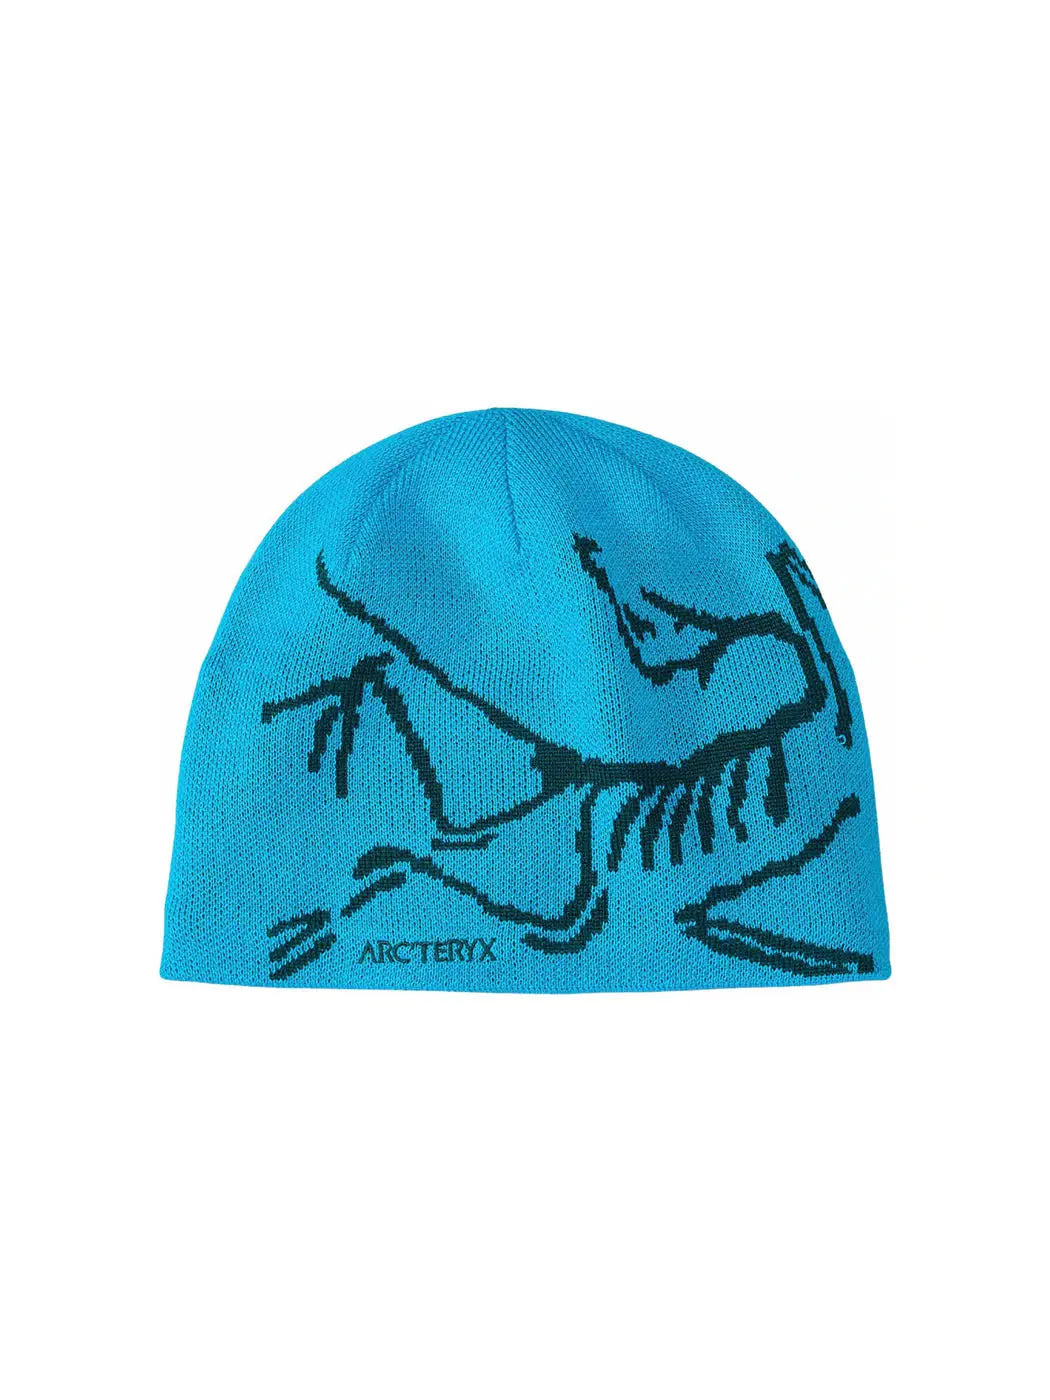 Arc'teryx Bird Head Toque Blue Tetra/Pytheas in Auckland, New Zealand - Shop name